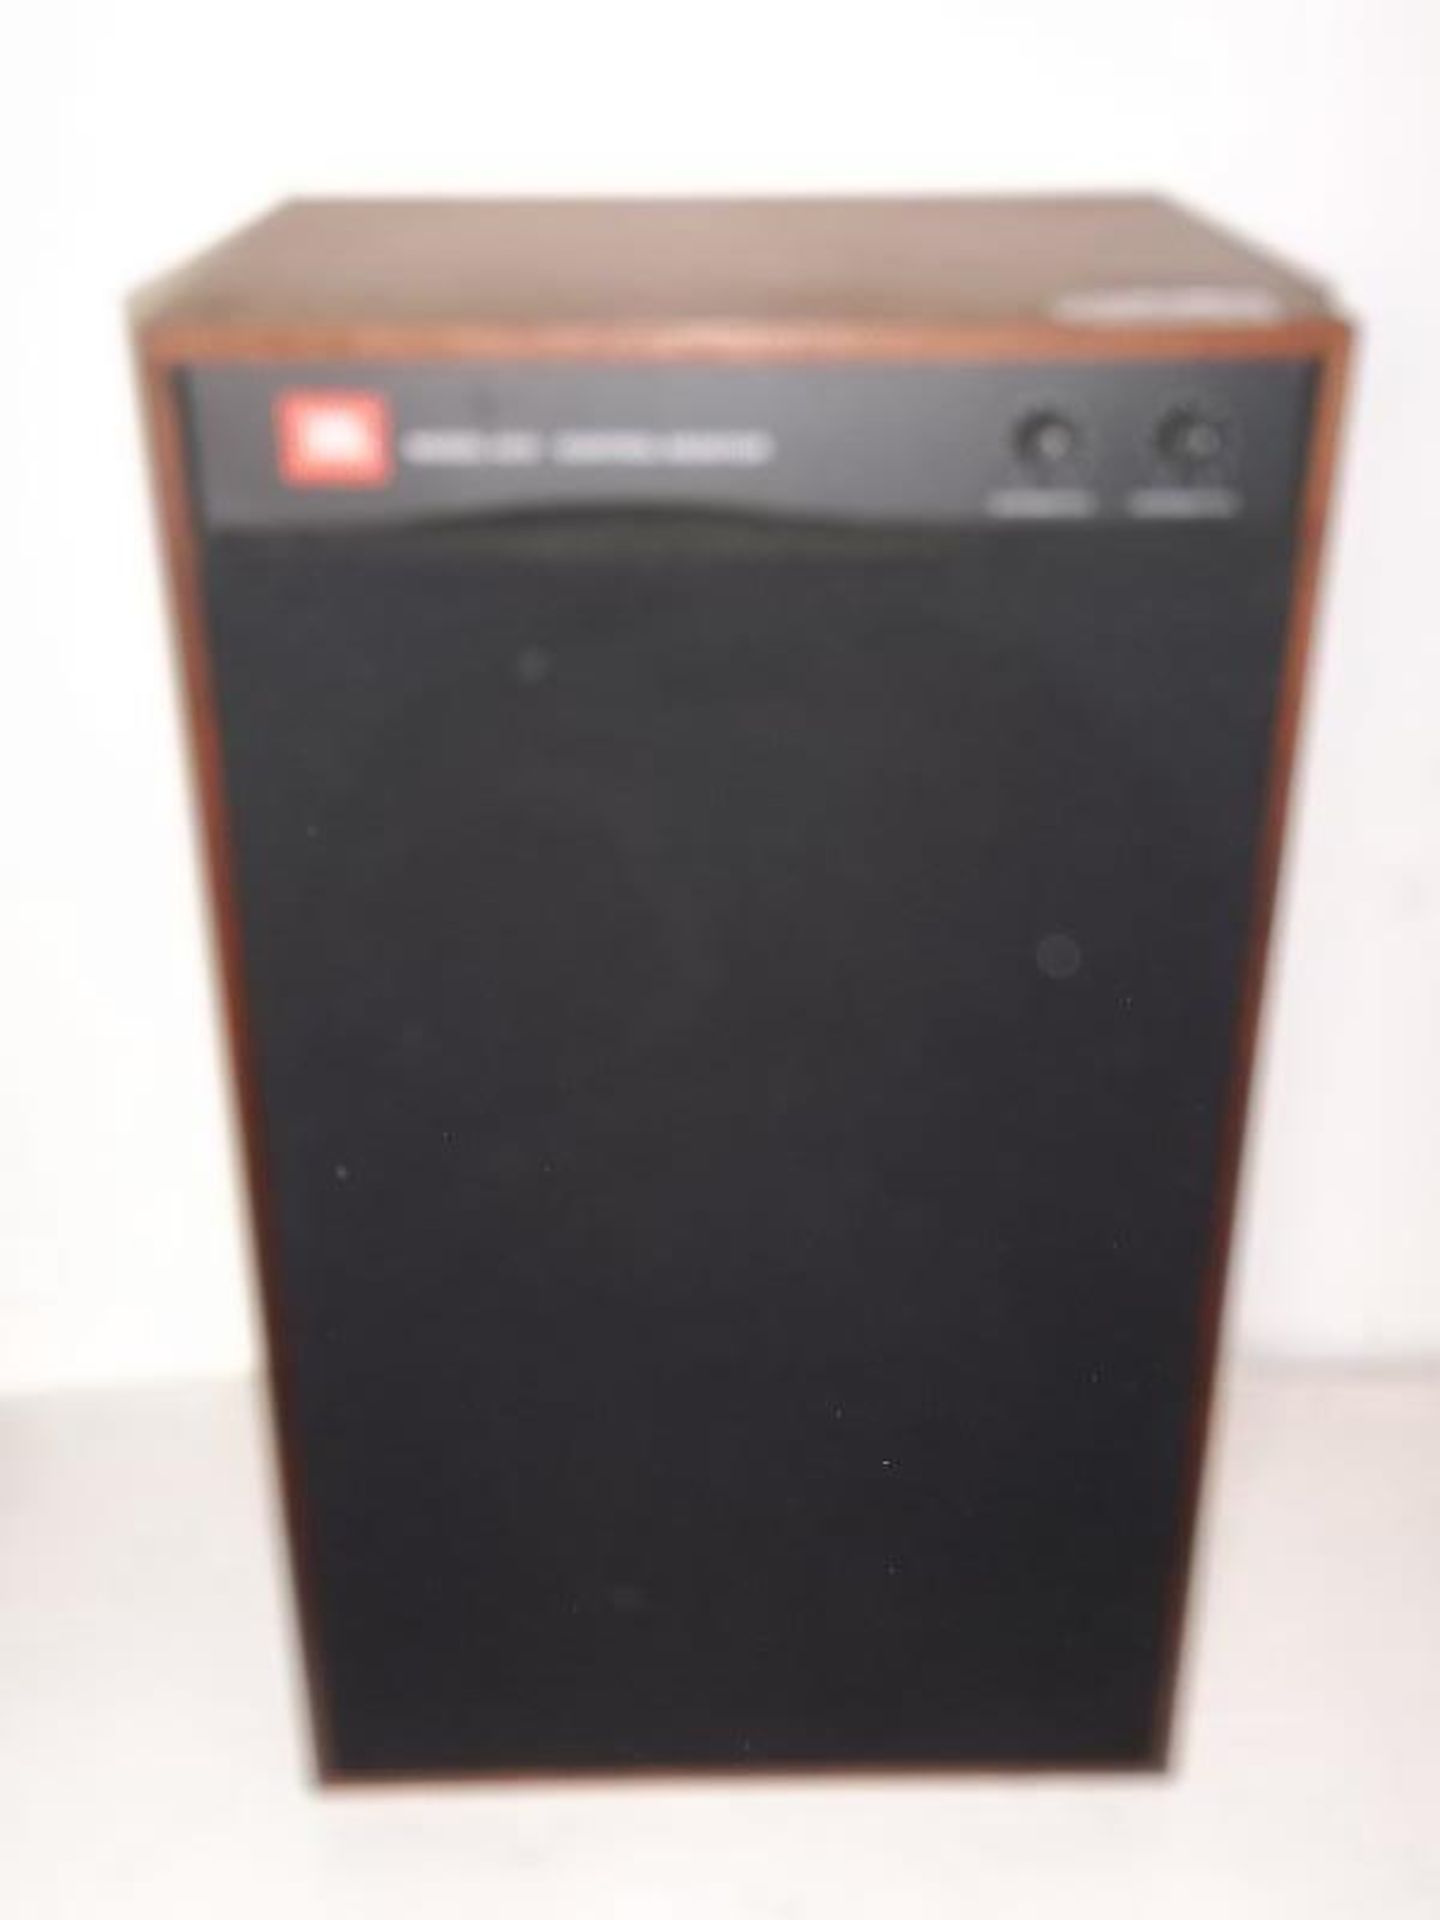 Pr JBL model 4312 speaker cabinets with speakers, 14" x 11.5 x 23.5" h